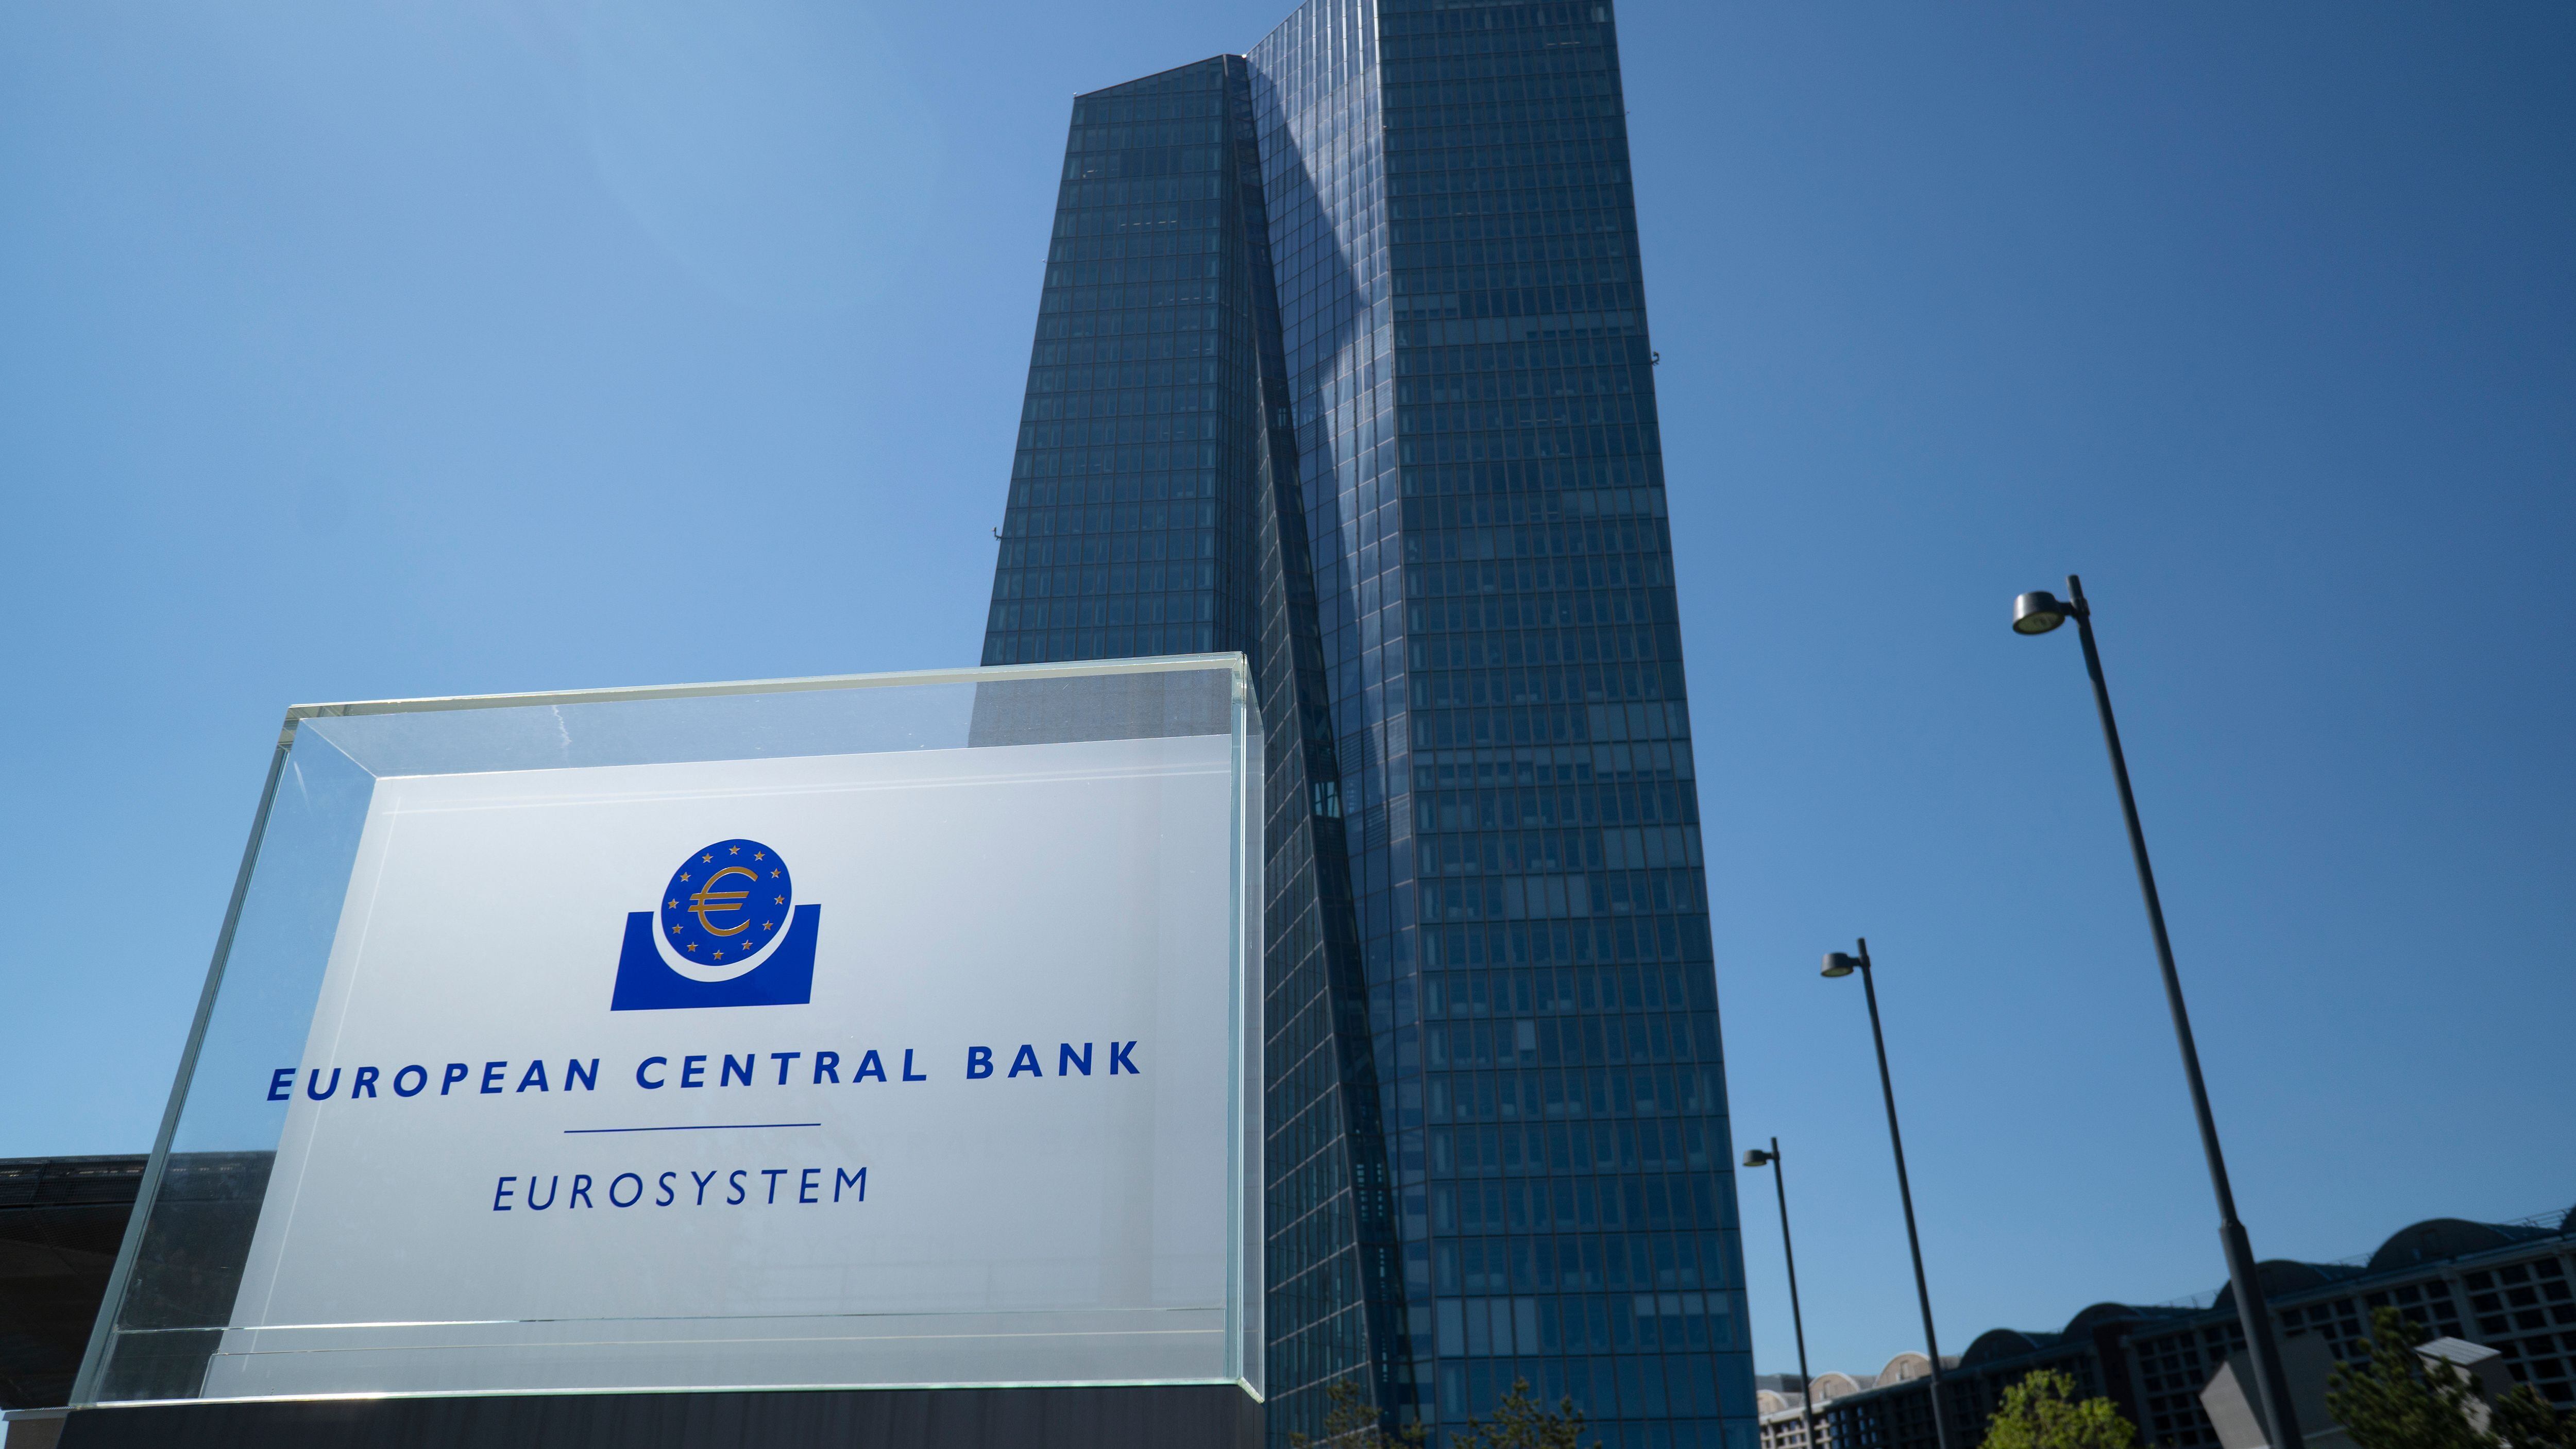 European central bank. Европейский банк. Центральный банк Европы. Европейский Центробанк. Европейский банк ЕЦБ.